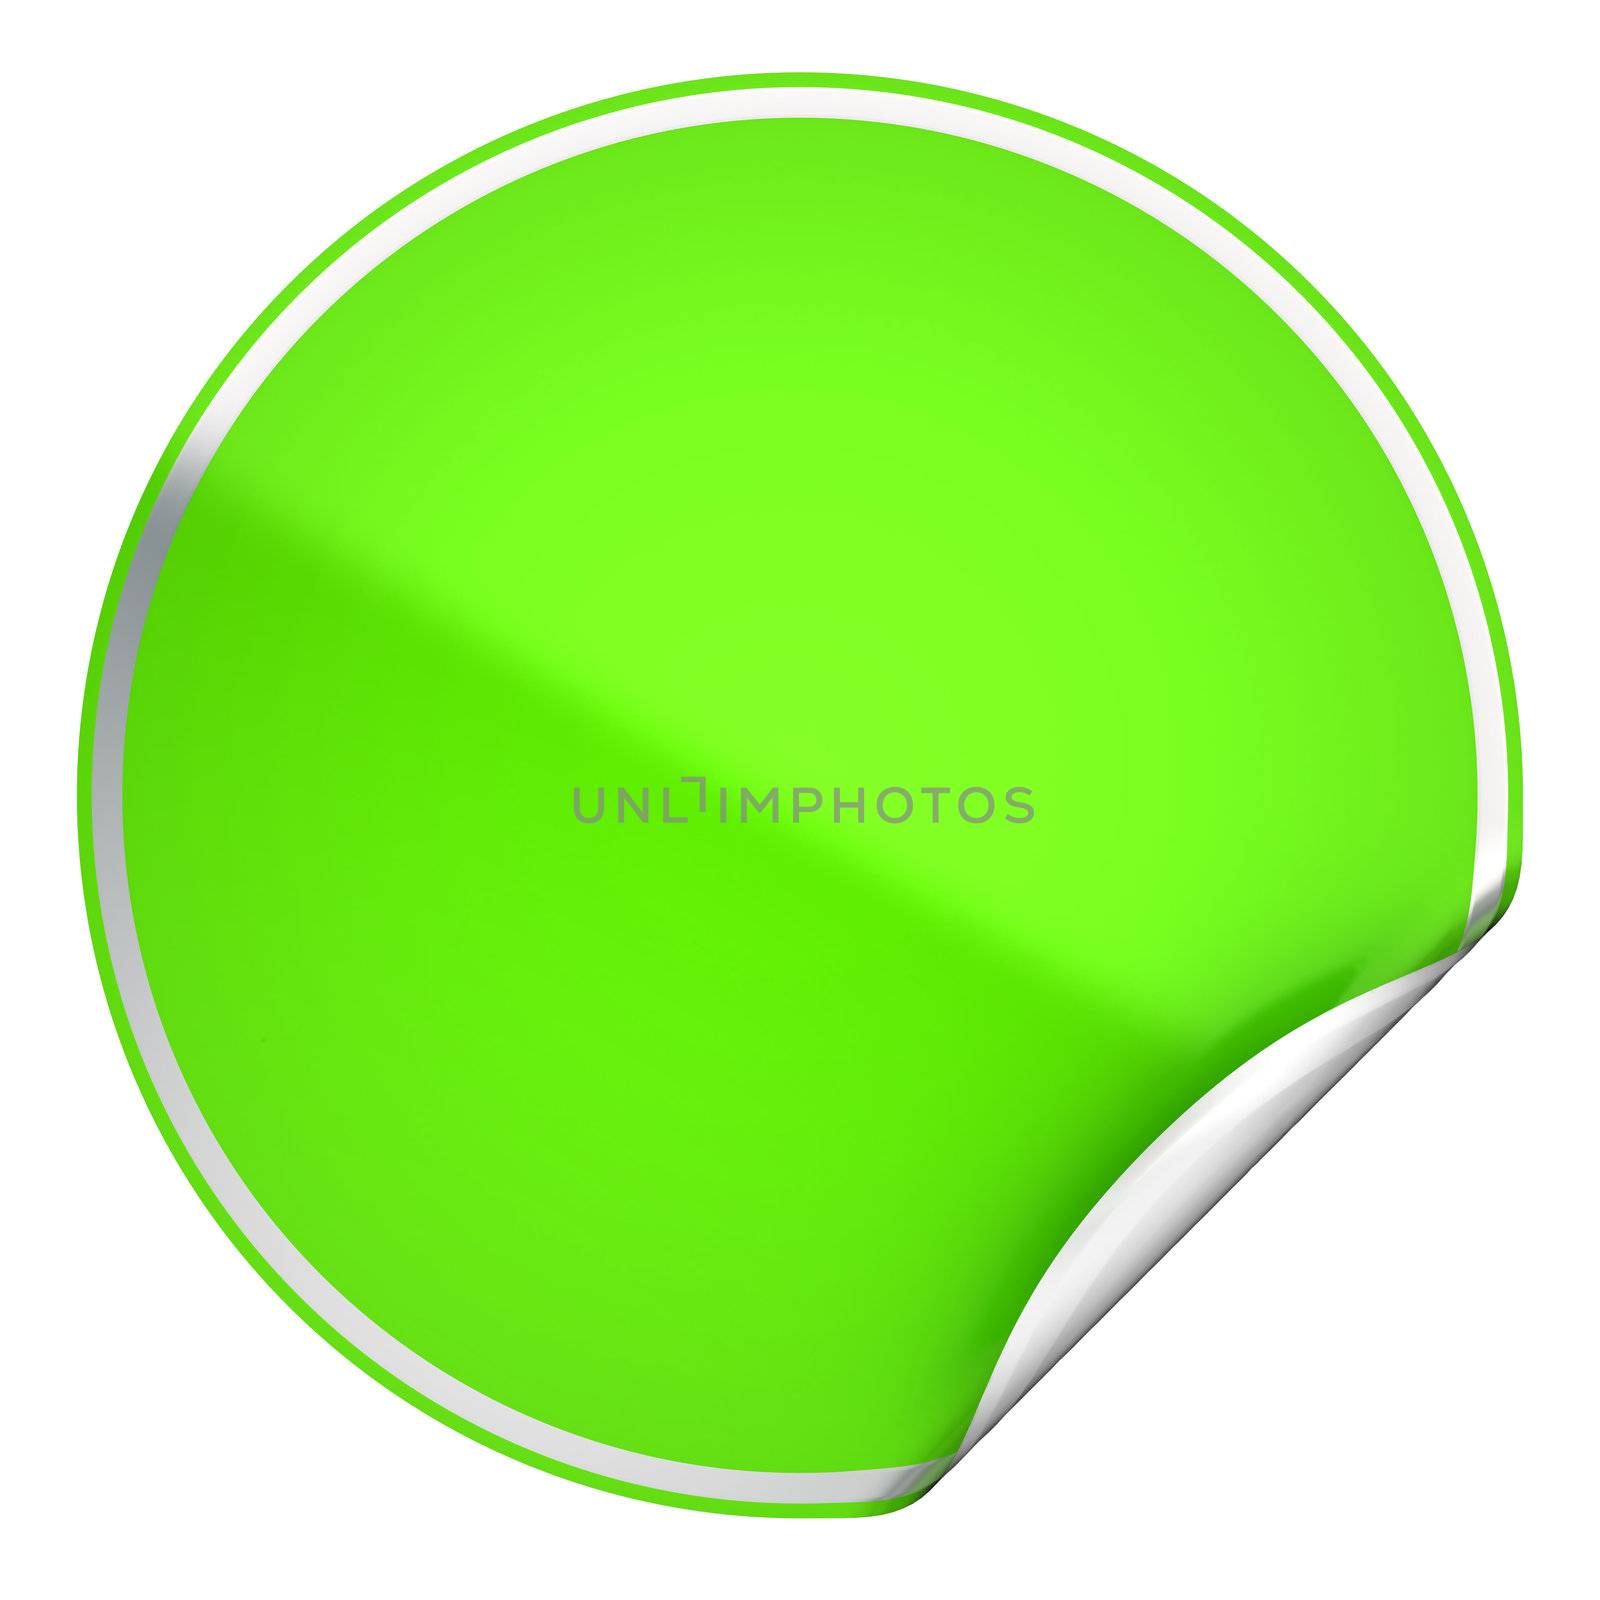 Green round bent sticker or label over white background